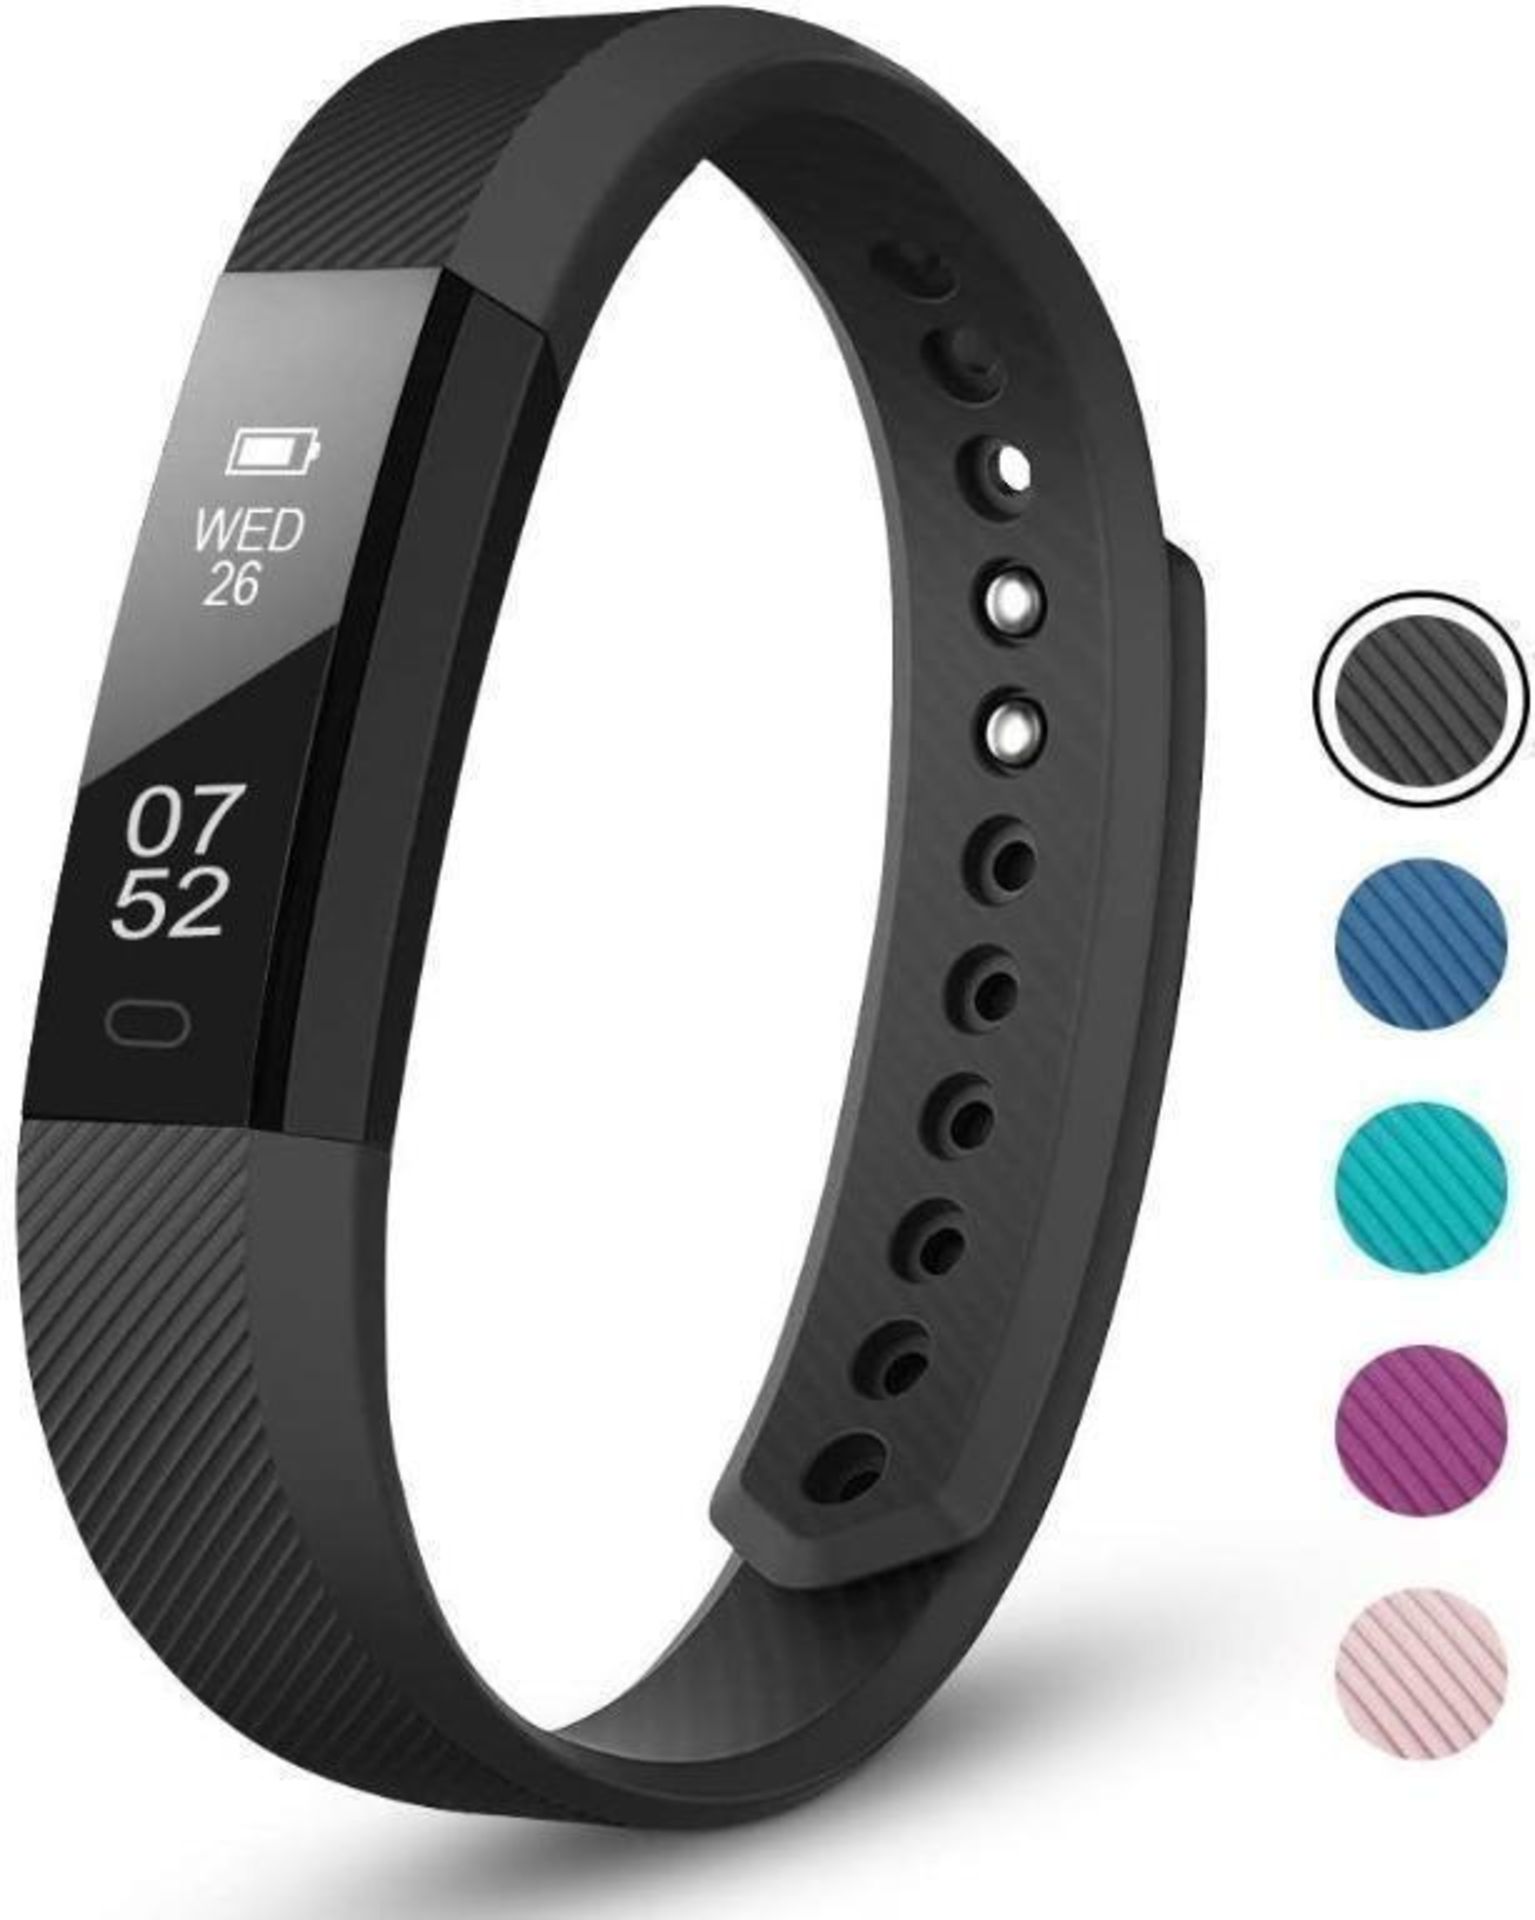 Letscom Fitness Tracker ID115 Smart Bracelet (Black)